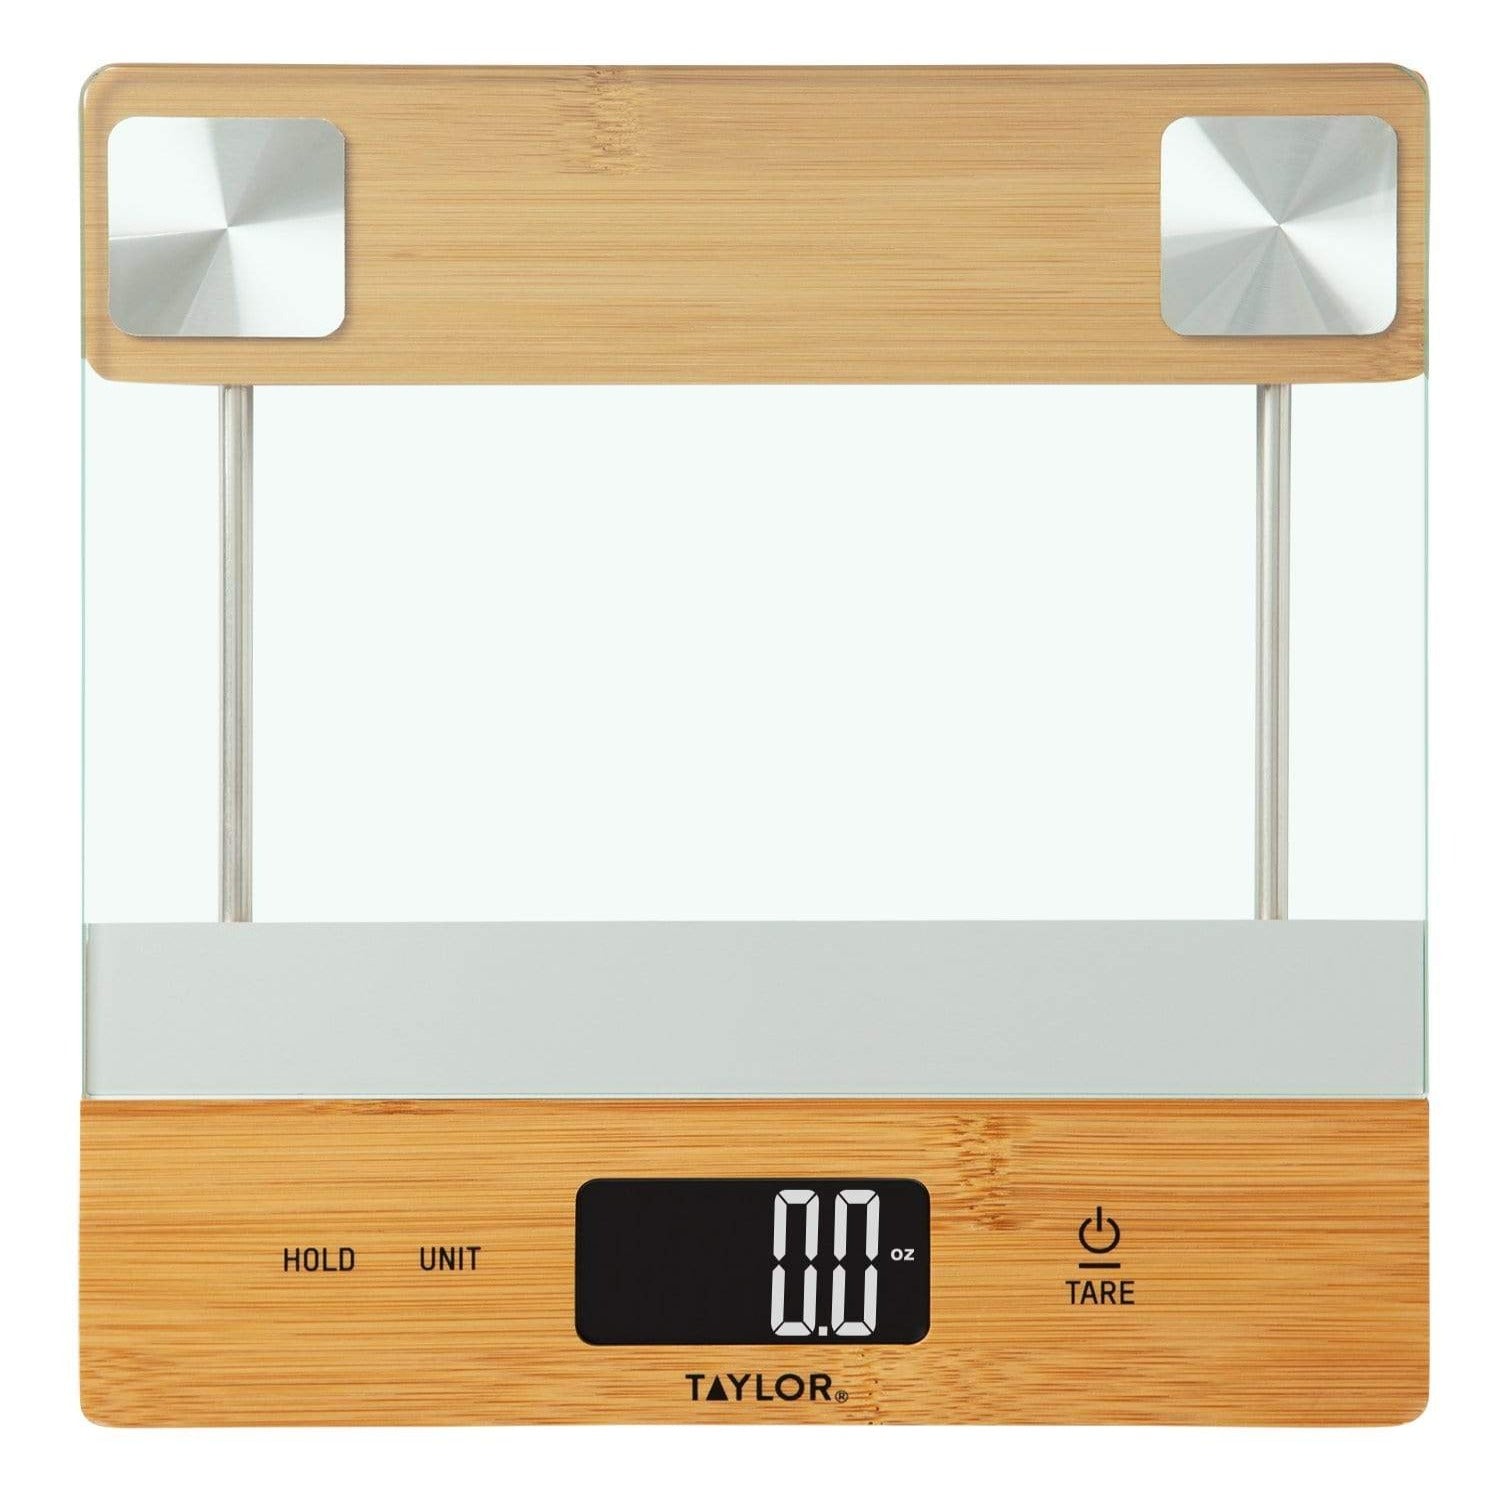 Taylor Kitchen Scale, Glass Platform, Digital